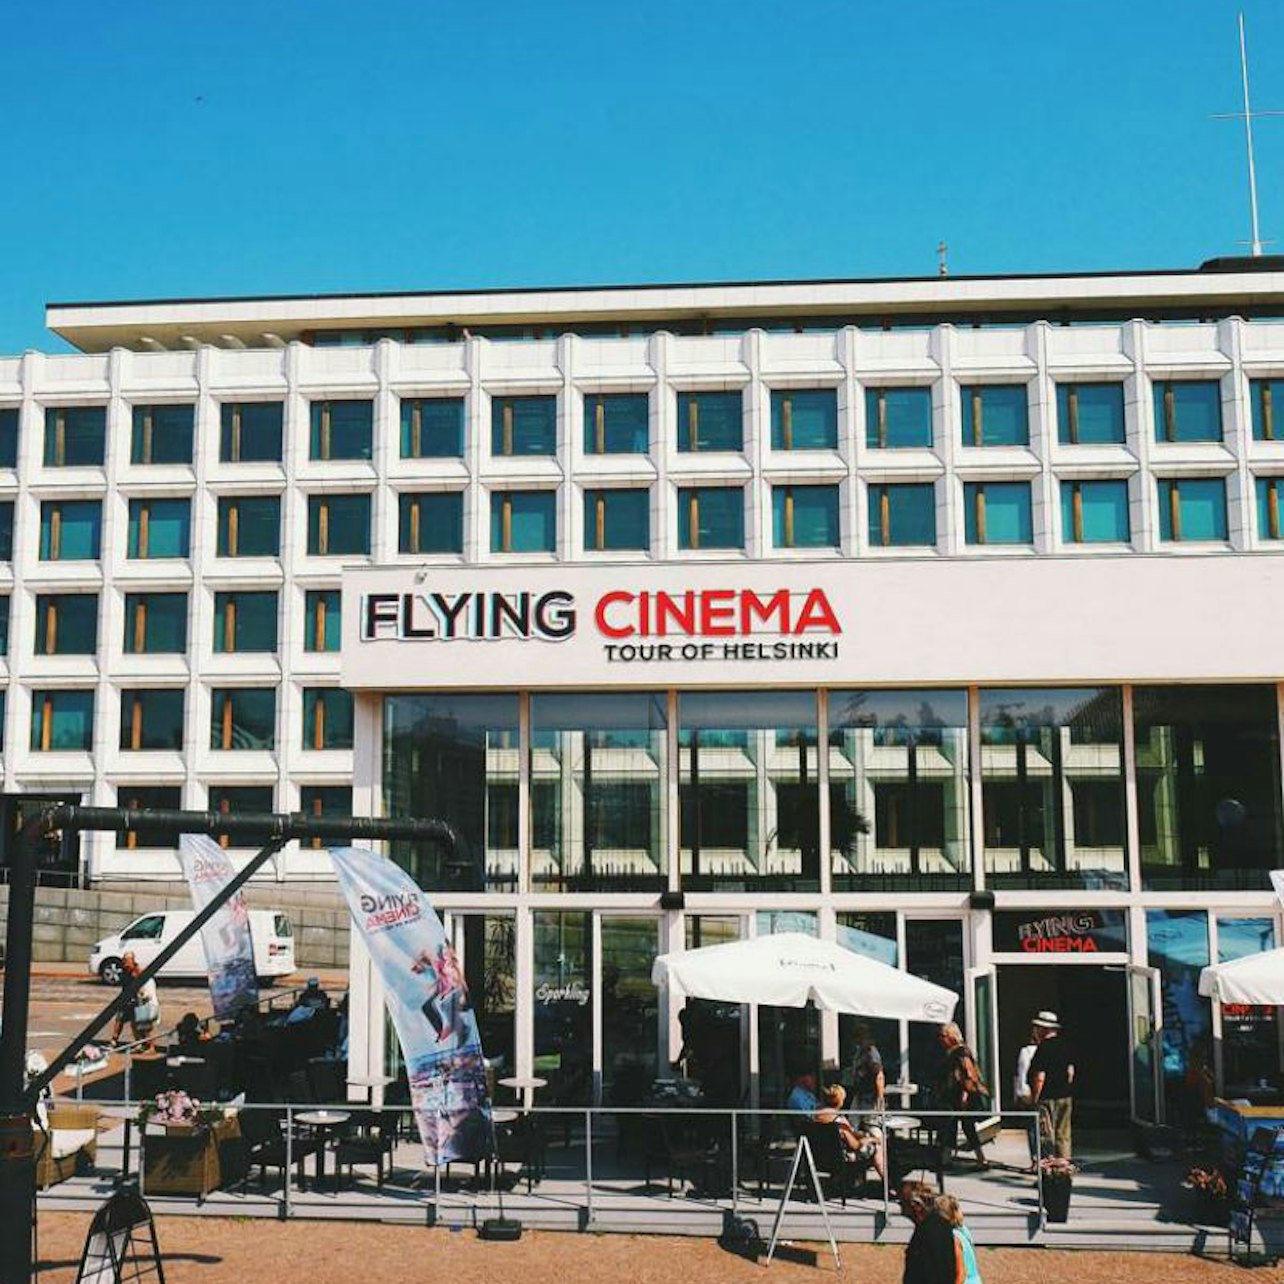 Flying Cinema Tour of Helsinki - Accommodations in Helsinki